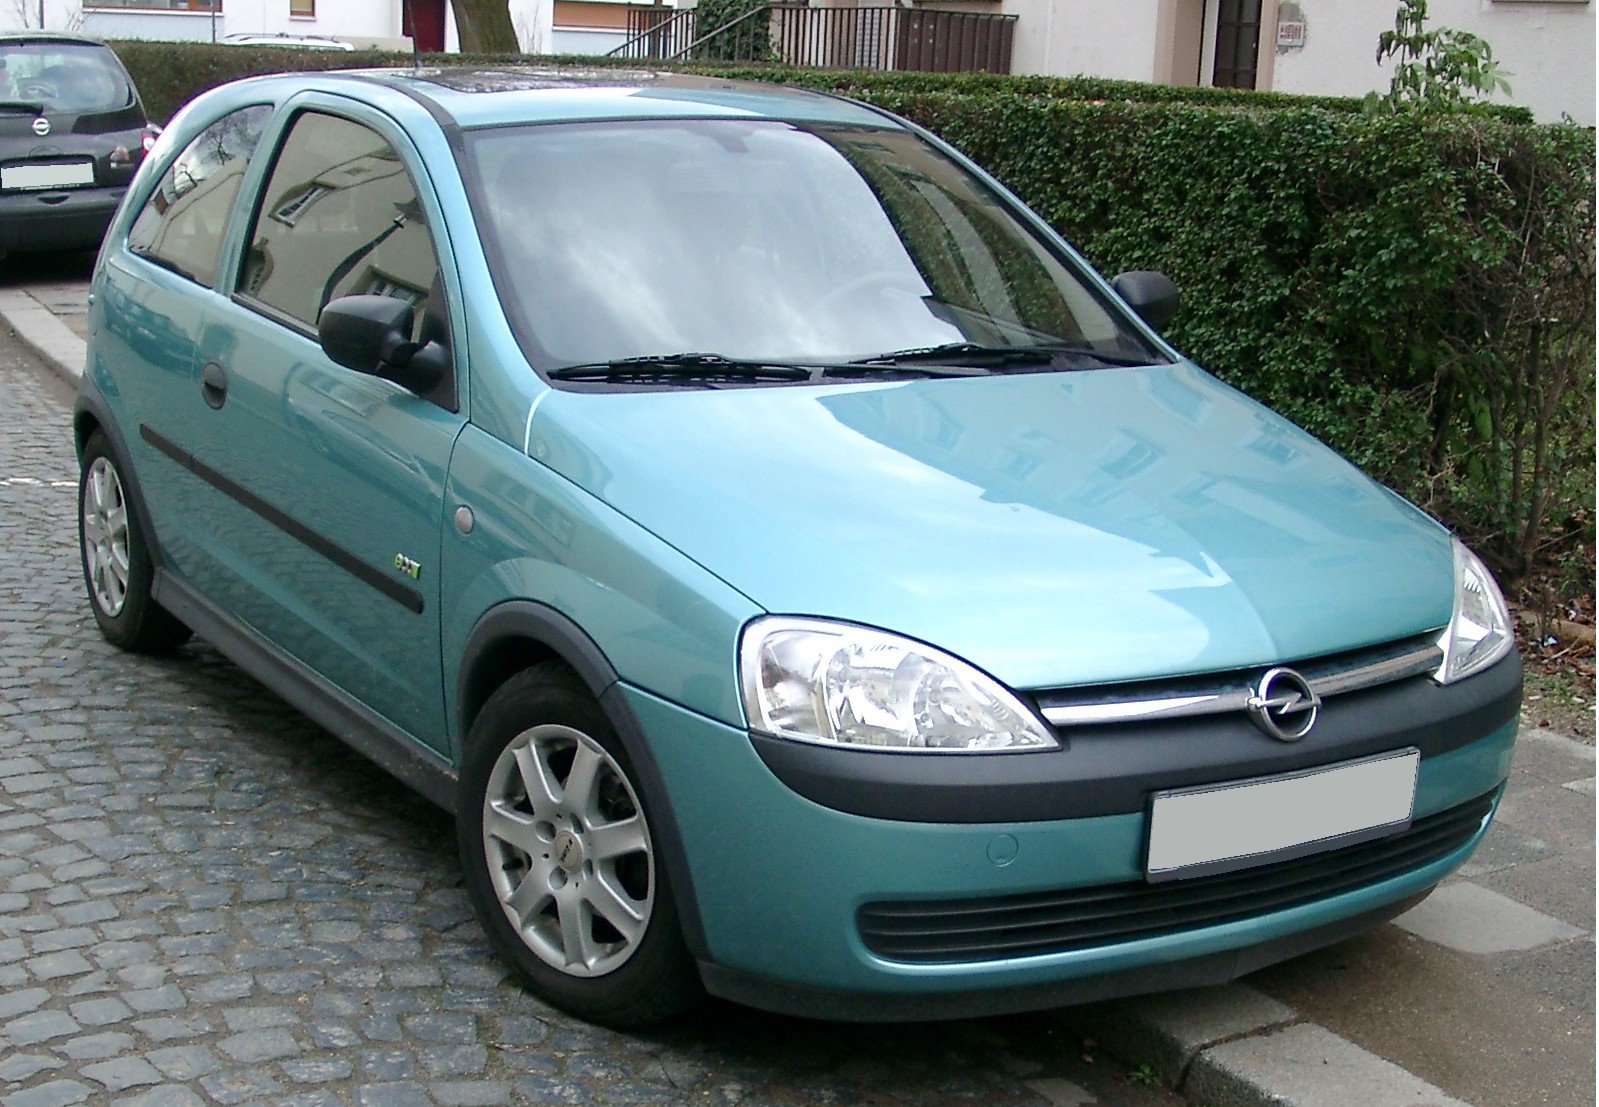 Opel corsa 1.0. Опель Корса 1.2 2003. Опель Корса 1.2 2004. Opel Corsa c 2007. Опель Корса 2002.